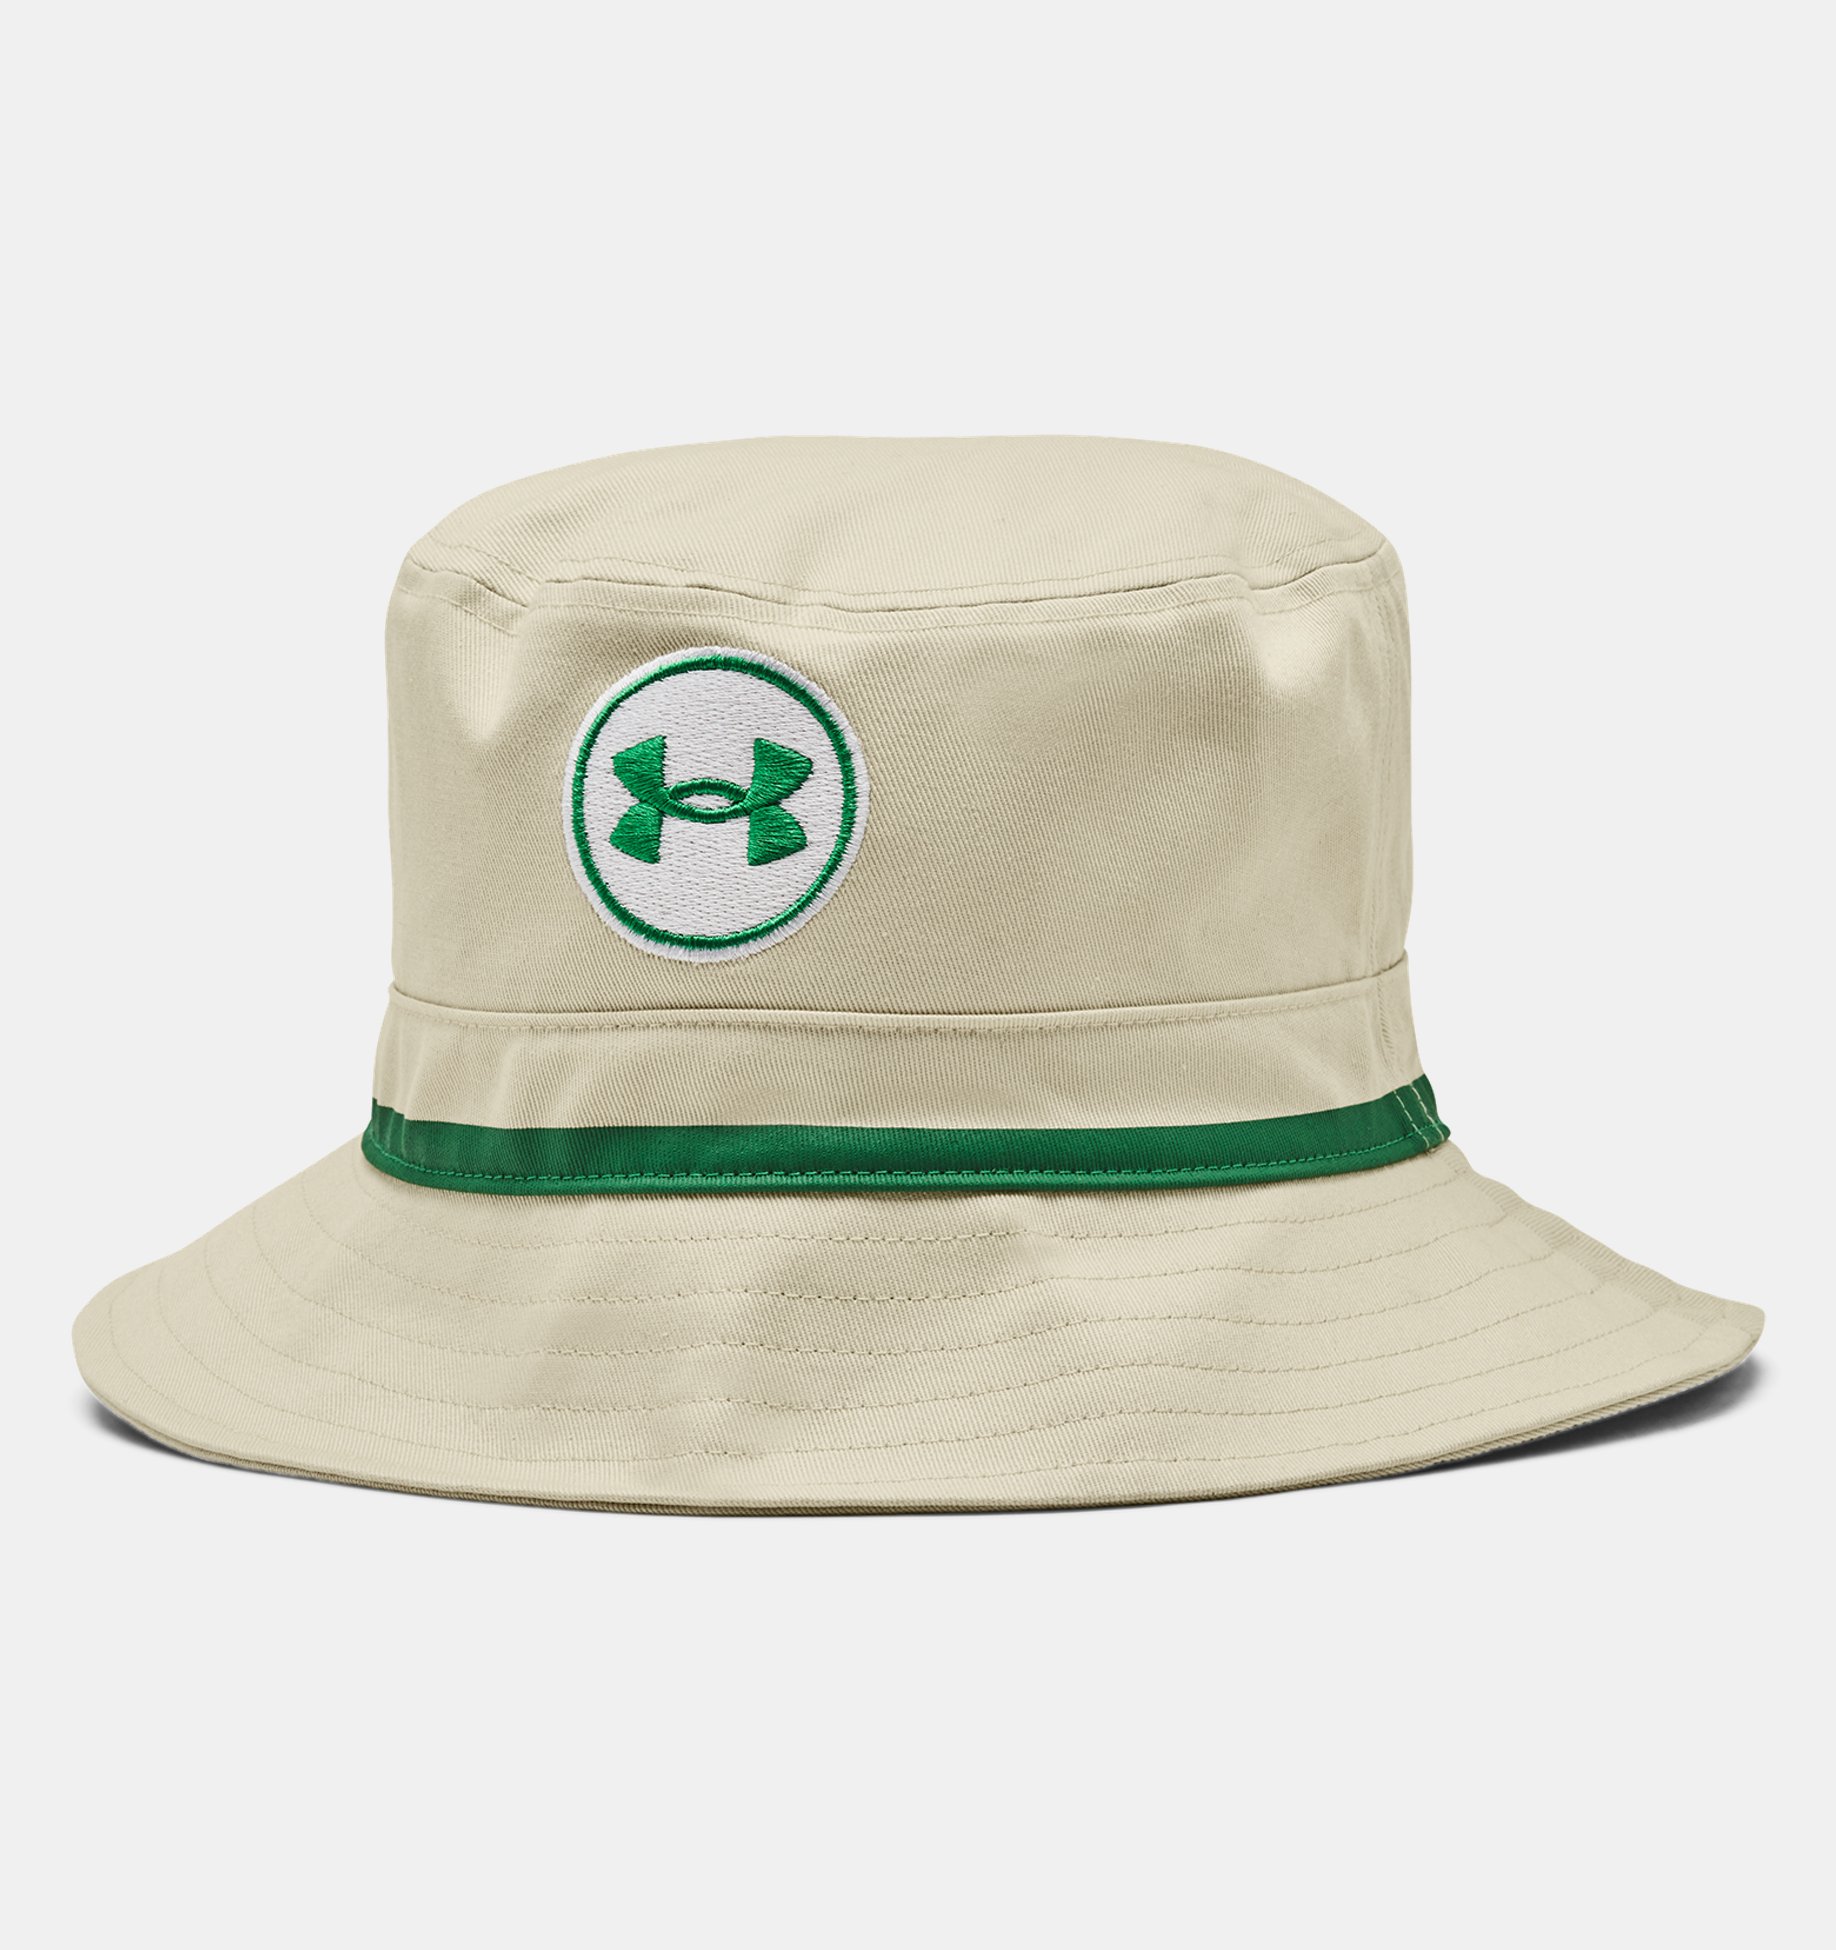 Under Armour Golf Driver Le Bucket Hat - Beige - Mens Size S/M - 1383483-273